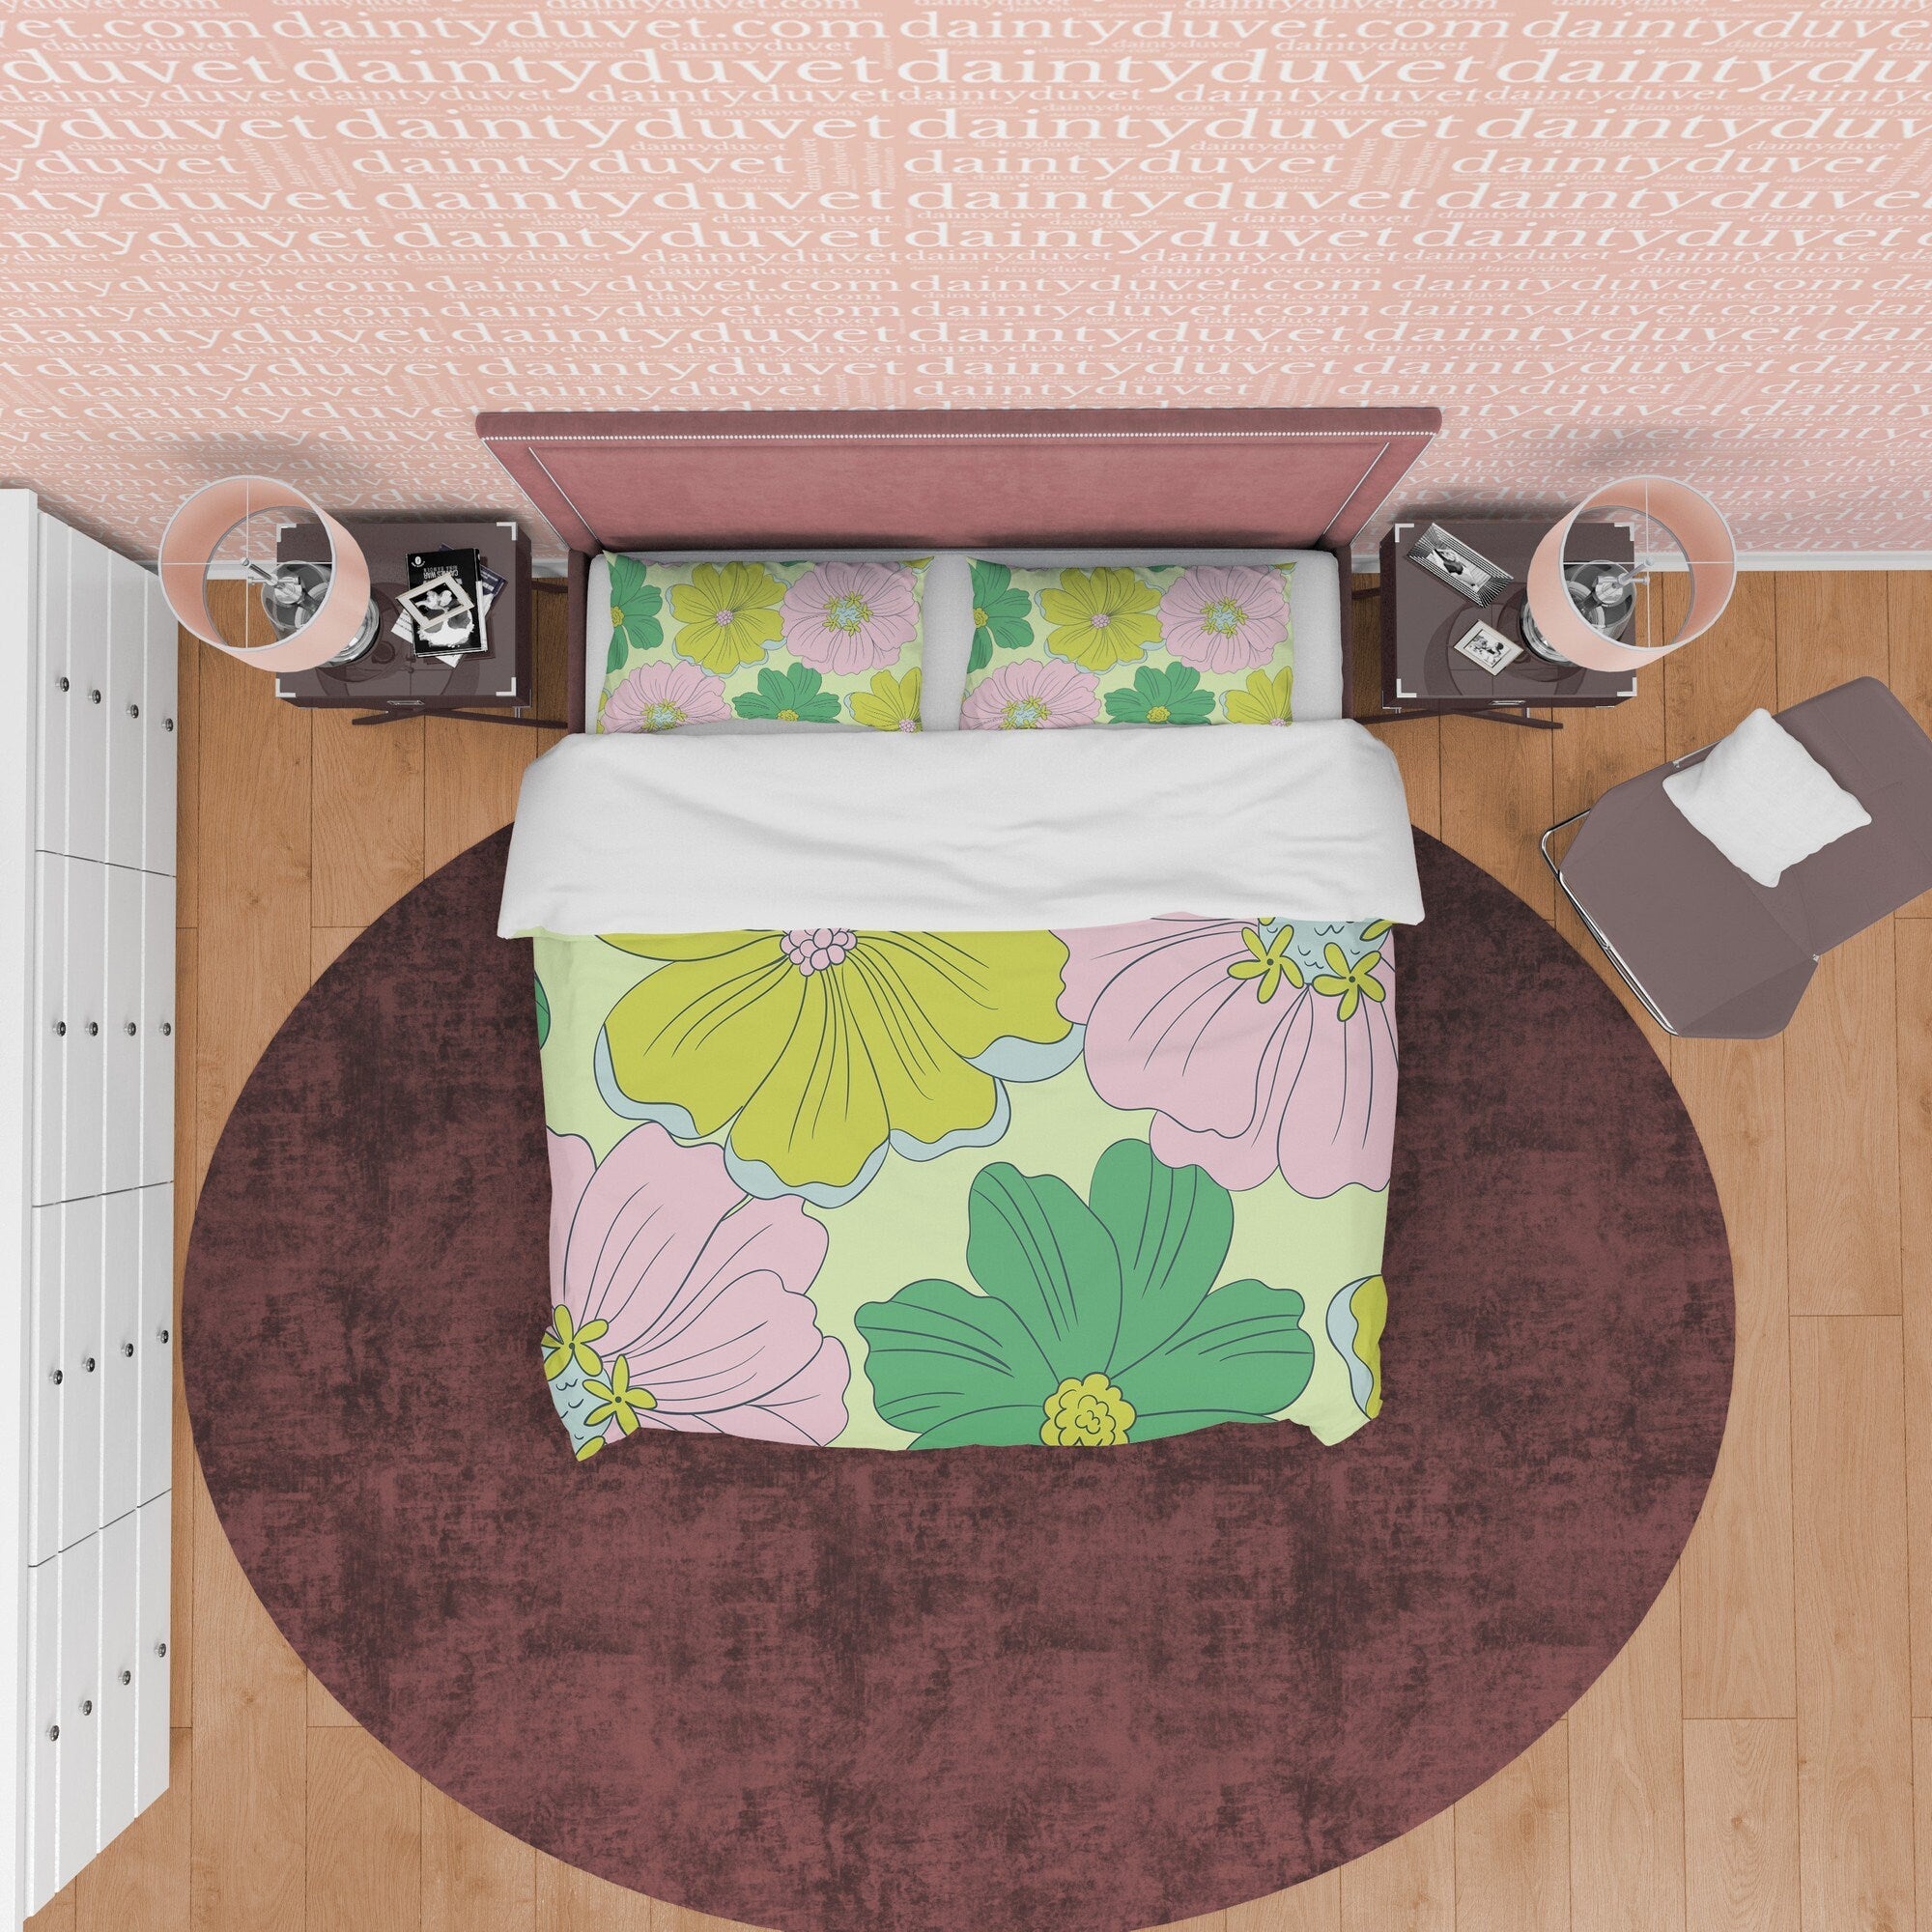 Boho Bedding Colorful Duvet Cover Bohemian Bedroom Set, Green Pink Floral Quilt Cover, Aesthetic Bedspread, Bright Color Unique Room Decor